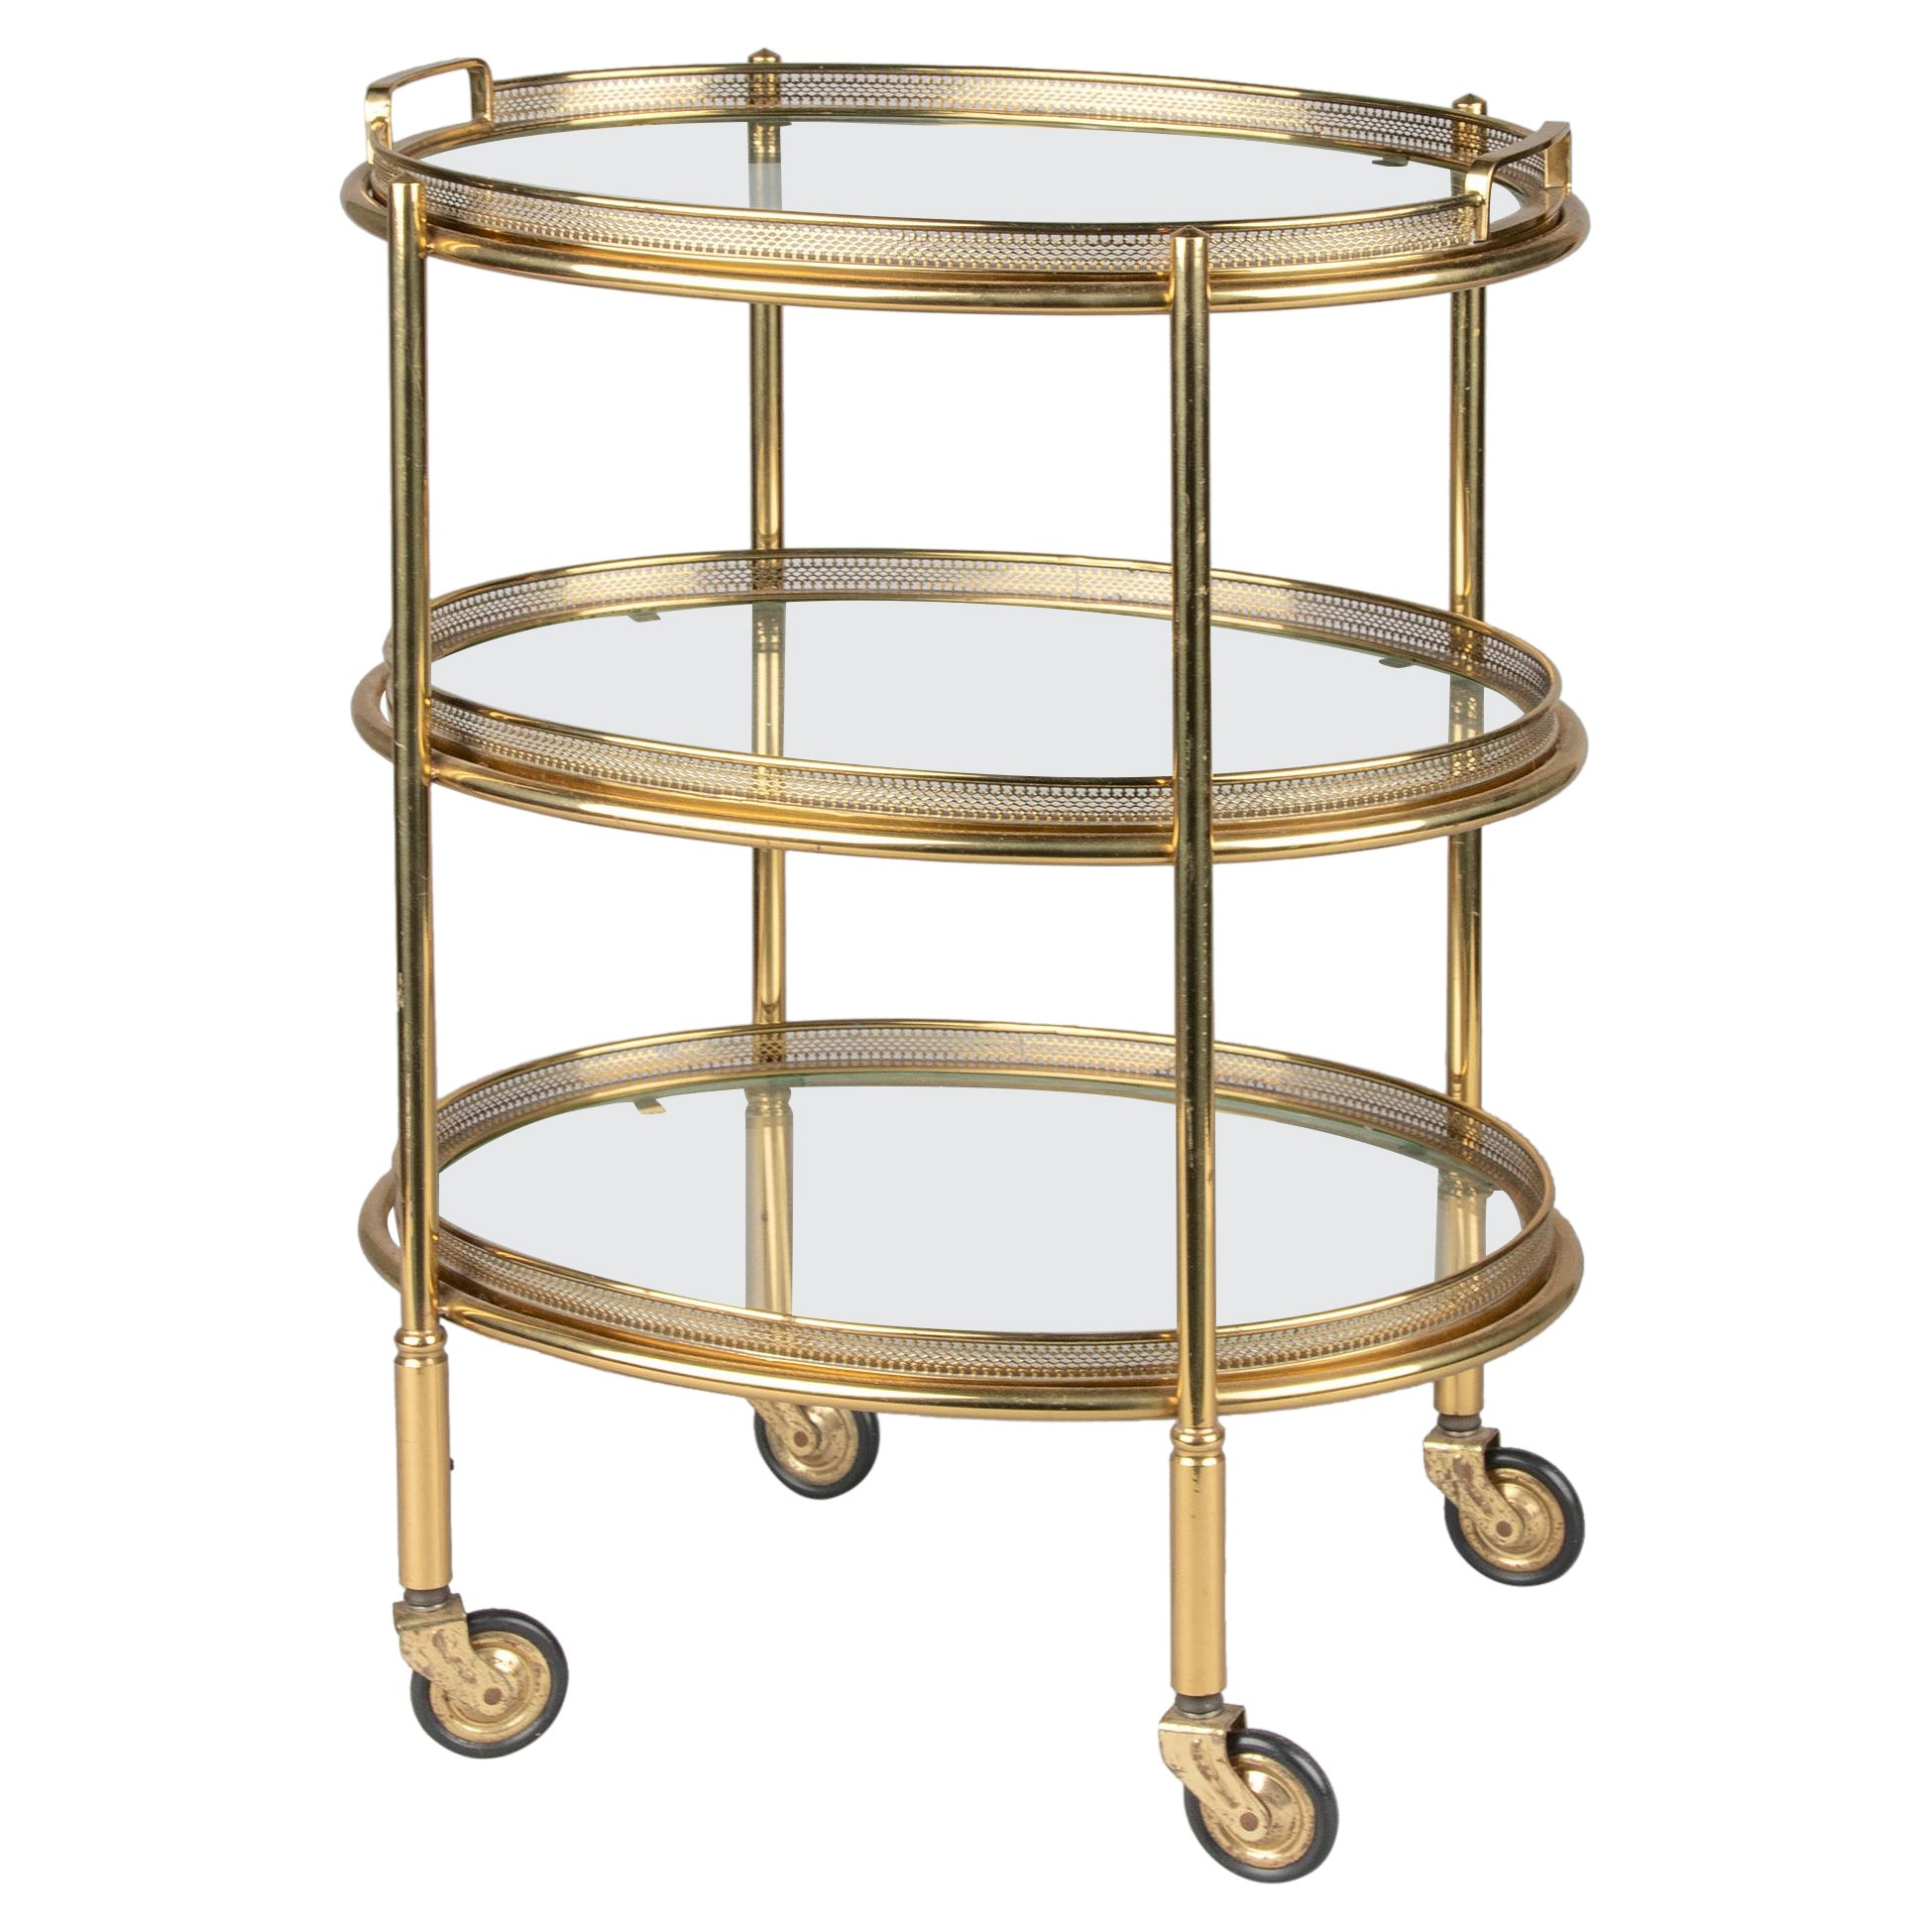 Copper Barcart-Trolley Oval Shaped Maison Baguès Style